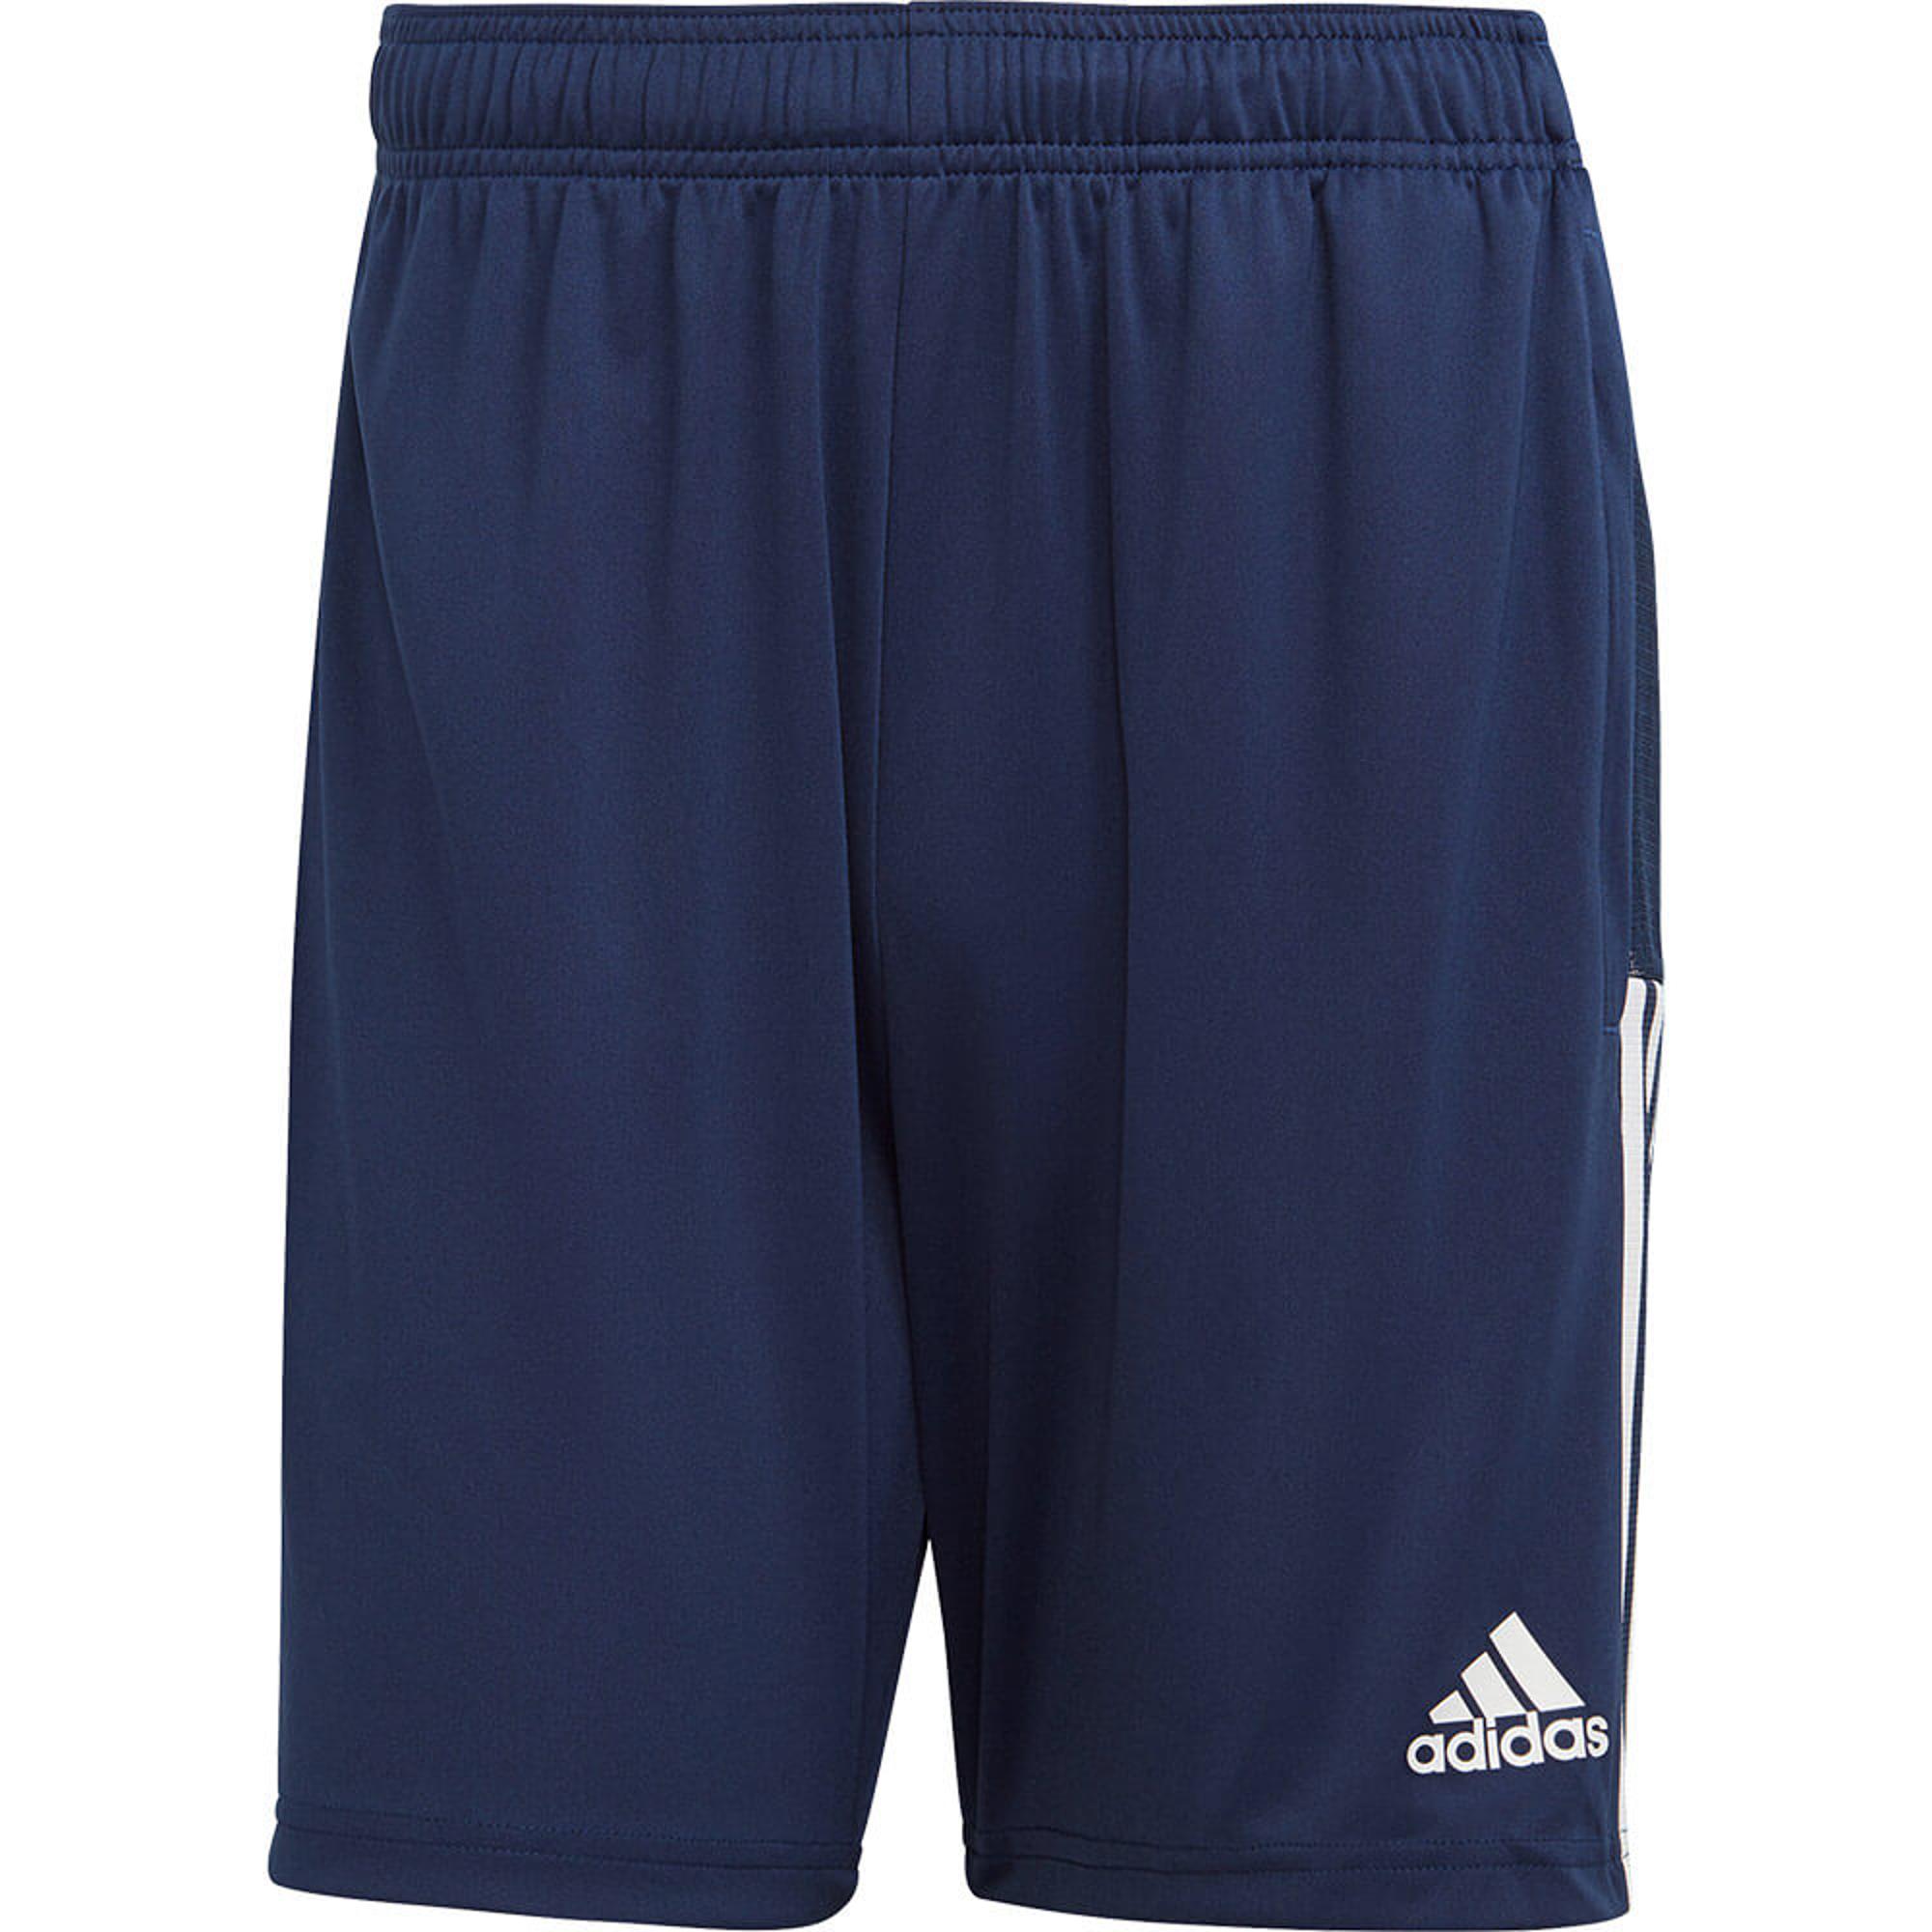 Adidas Tiro Training Shorts: The Soccer Corner The Soccer Corner